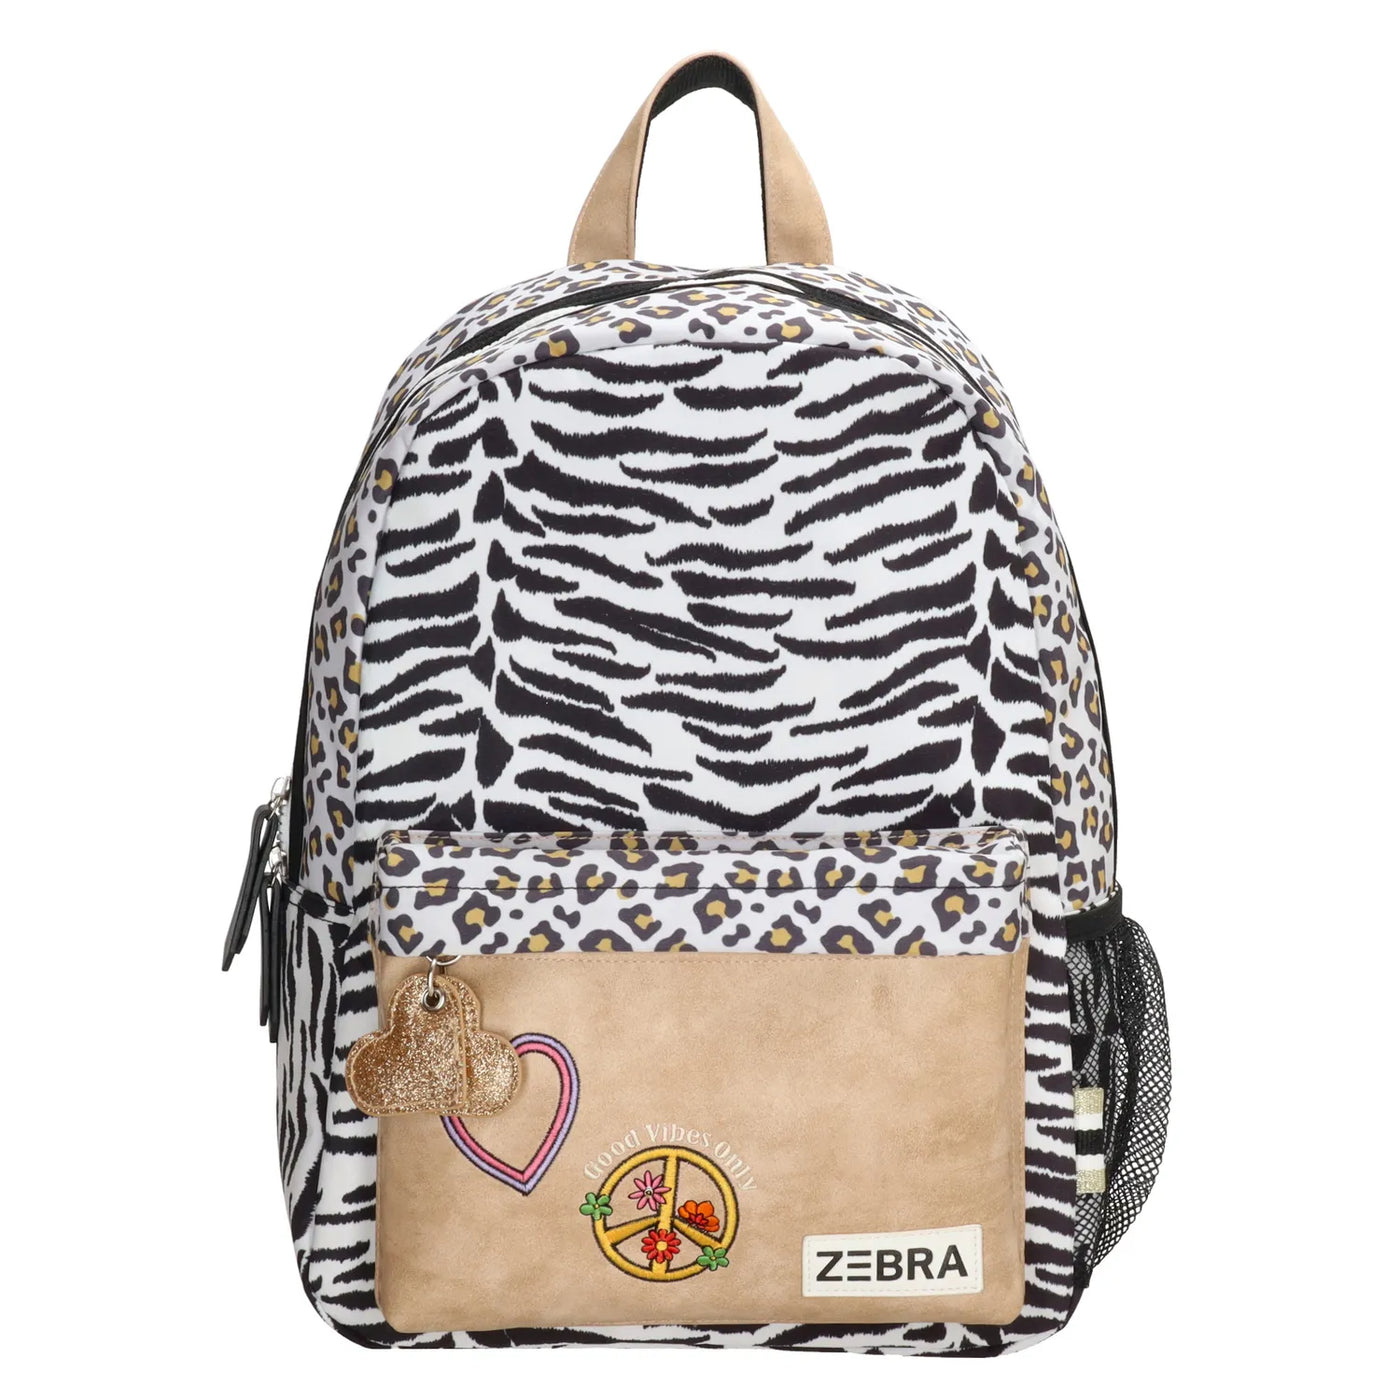 Zebra girls rugzak Tiger Leopard wit/beige 20769447